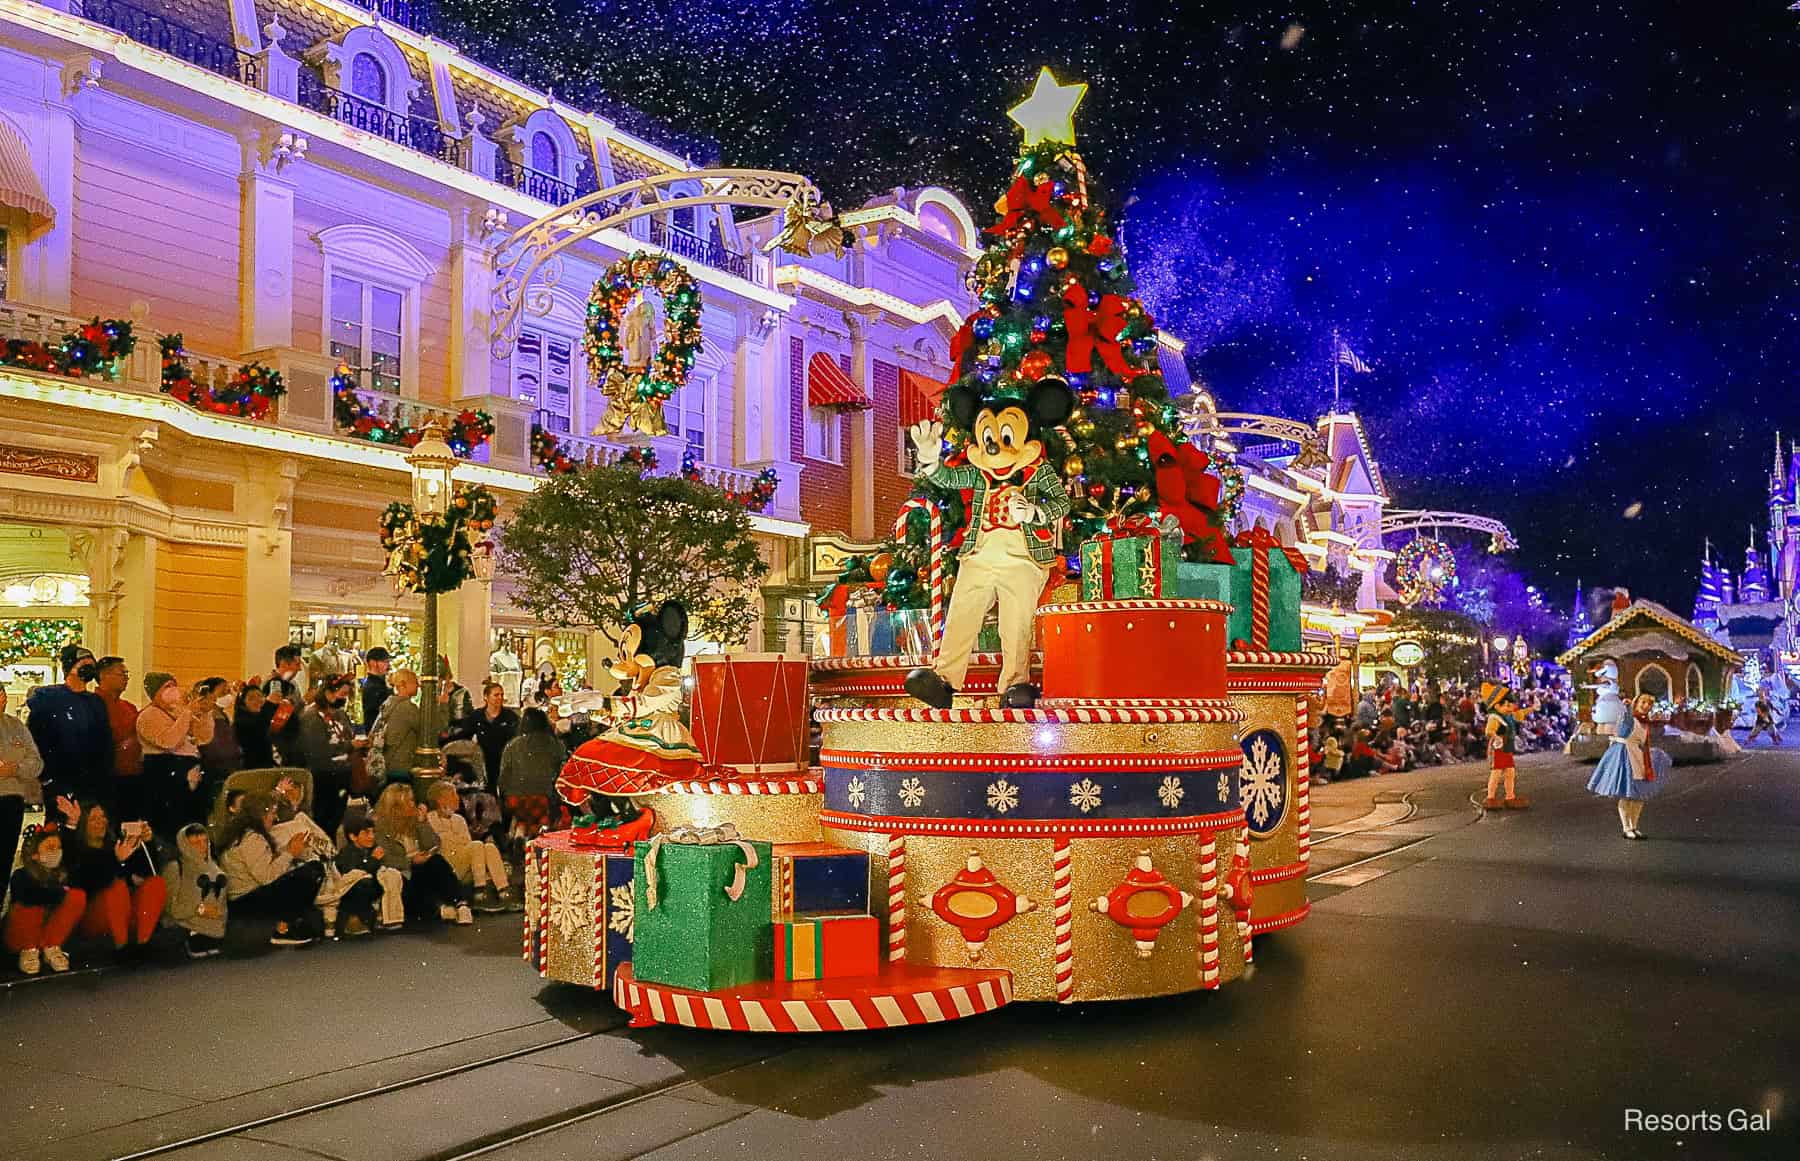 Things to Do At Disney World During Christmas: Parade